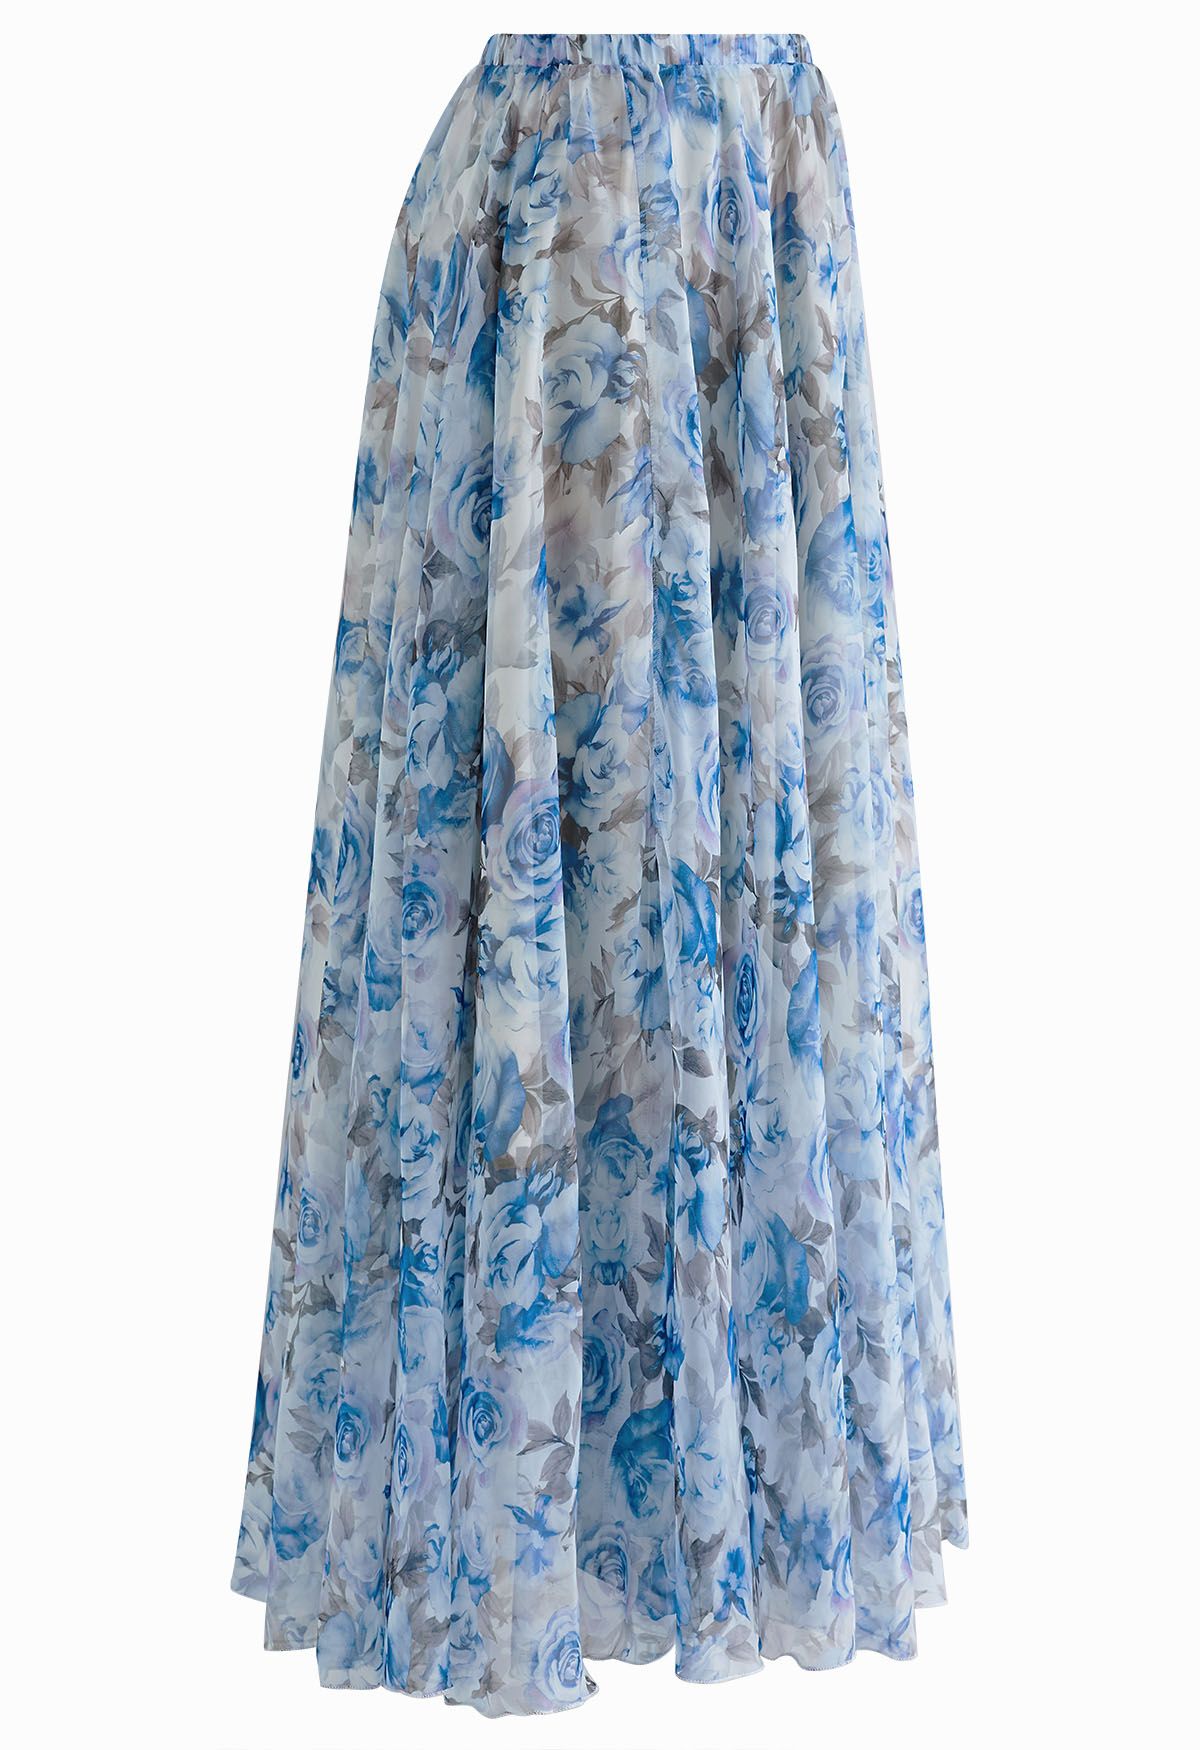 Blue Rose Printed Chiffon Maxi Skirt